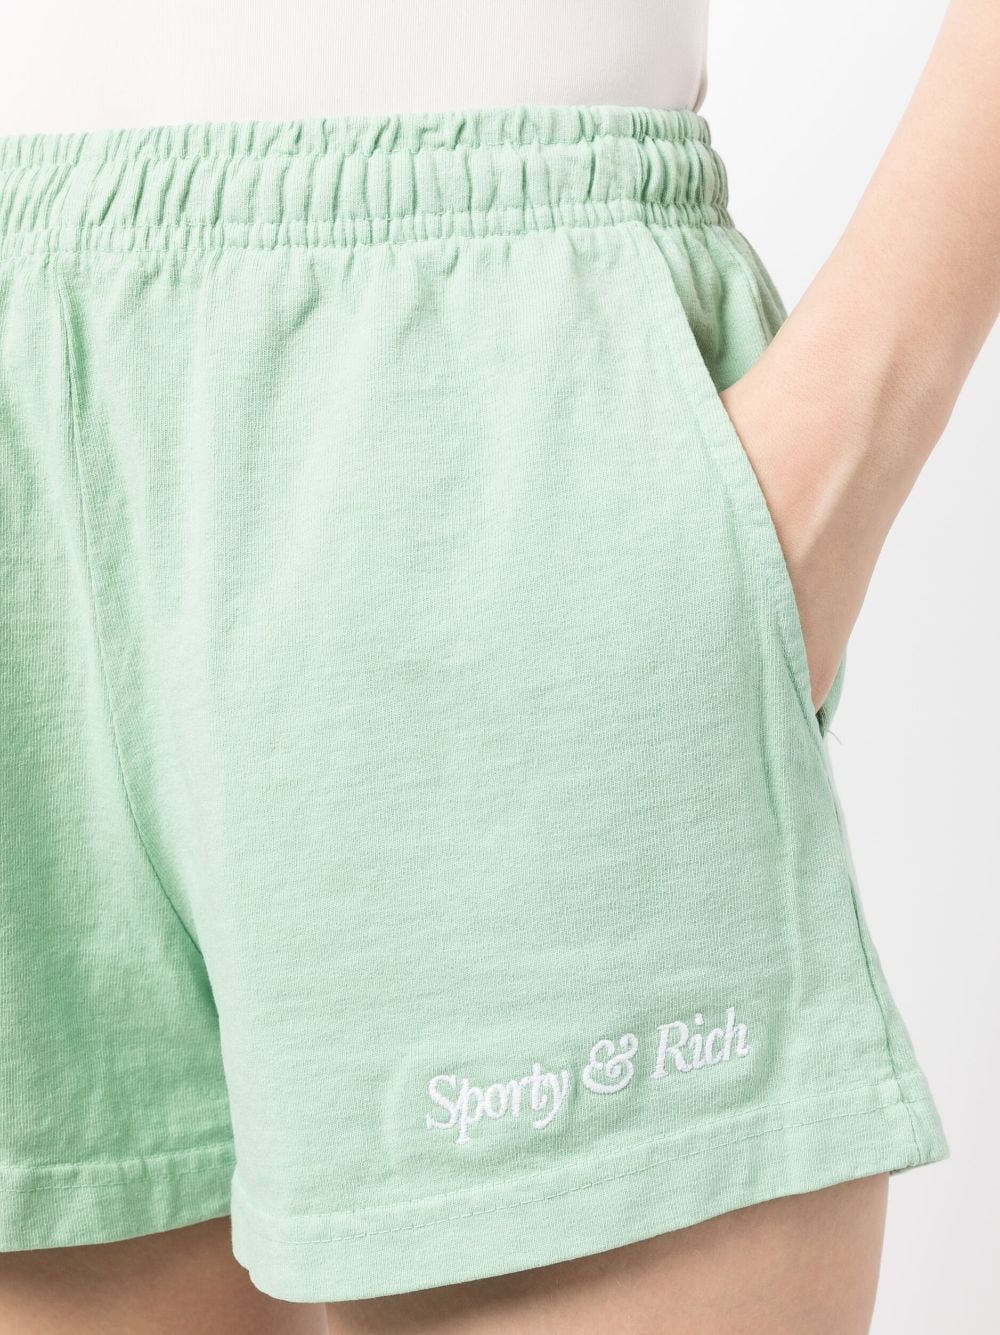 Shorts con ricamo in verde menta - donna SPORTY & RICH | SH862JD